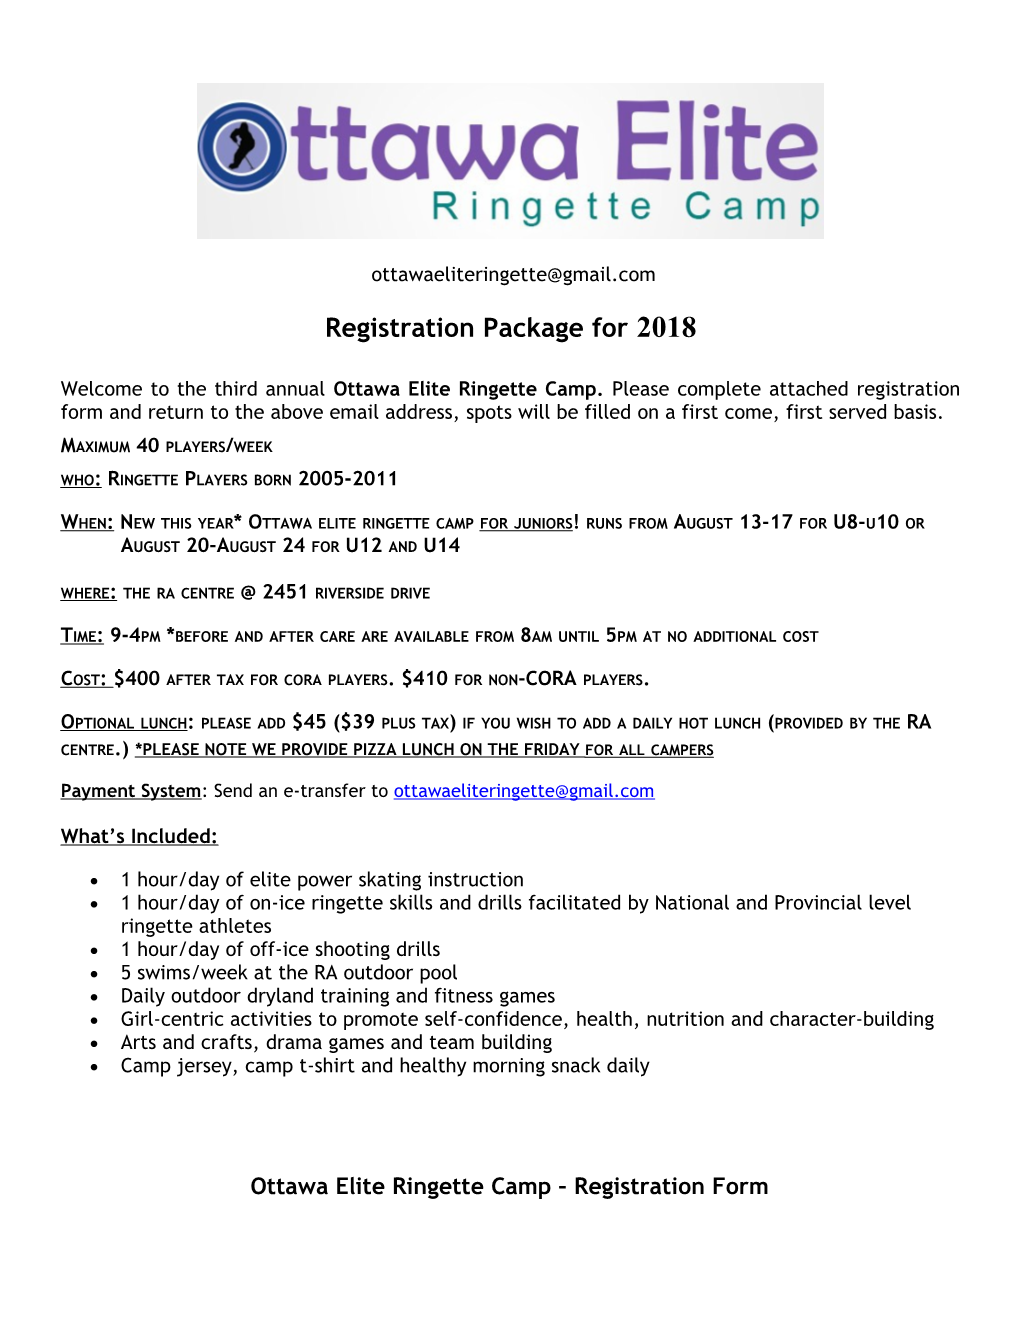 Registration Package For2018